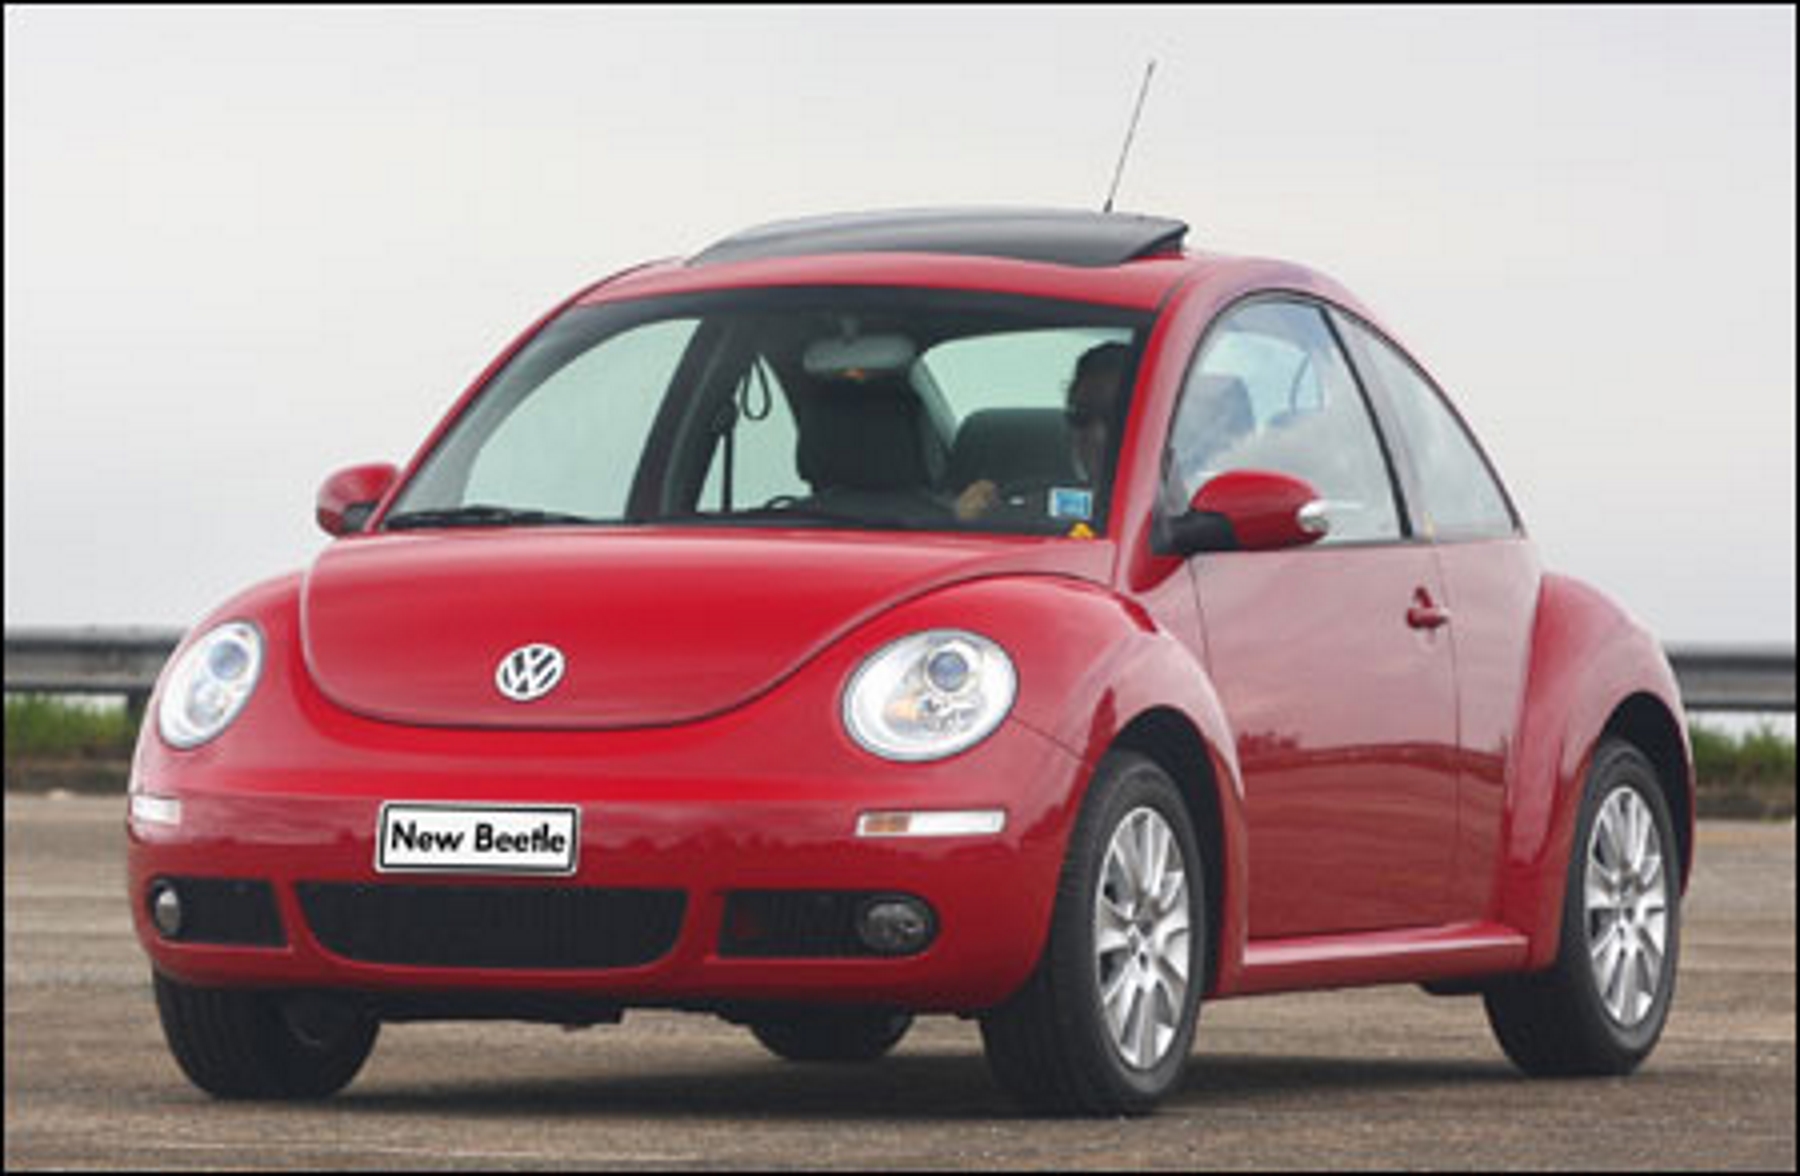 New beetle vermelho vista fronto lateral 